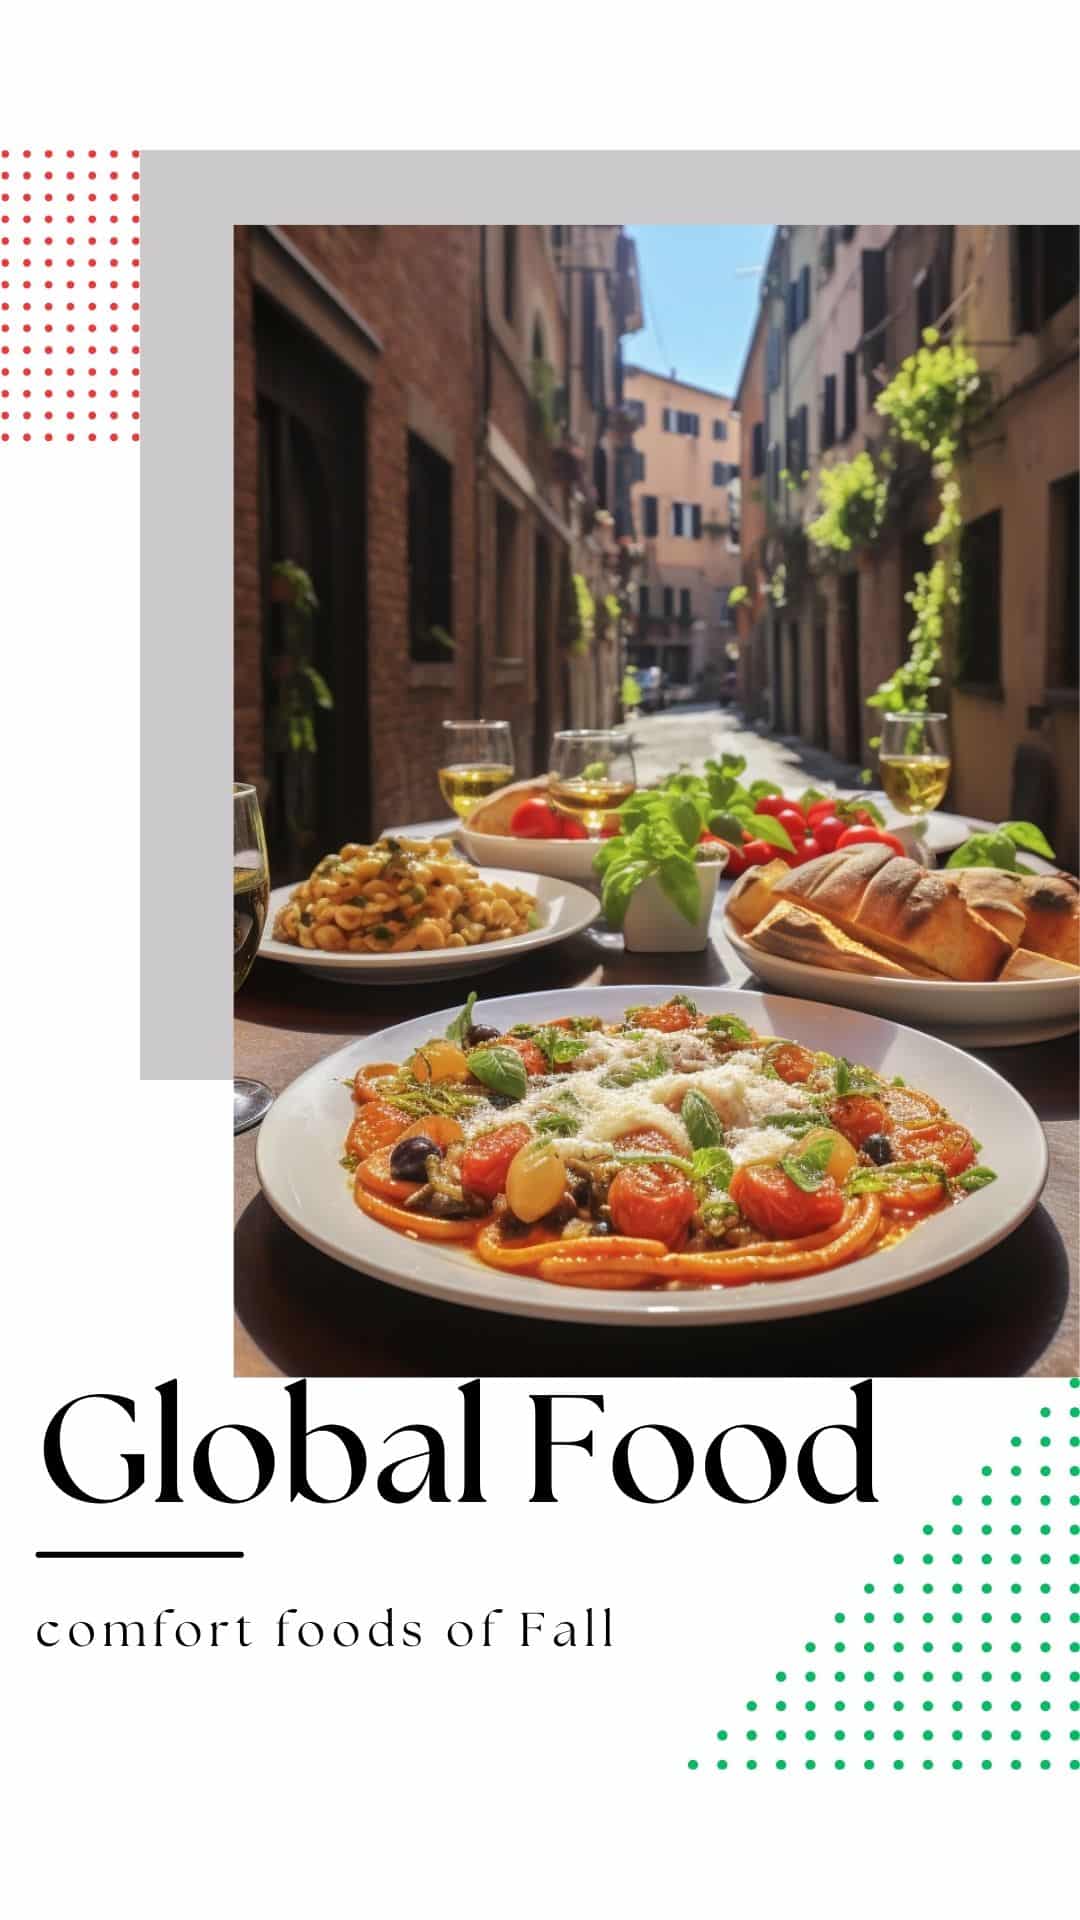 Global Comfort Food on a side street in Europe